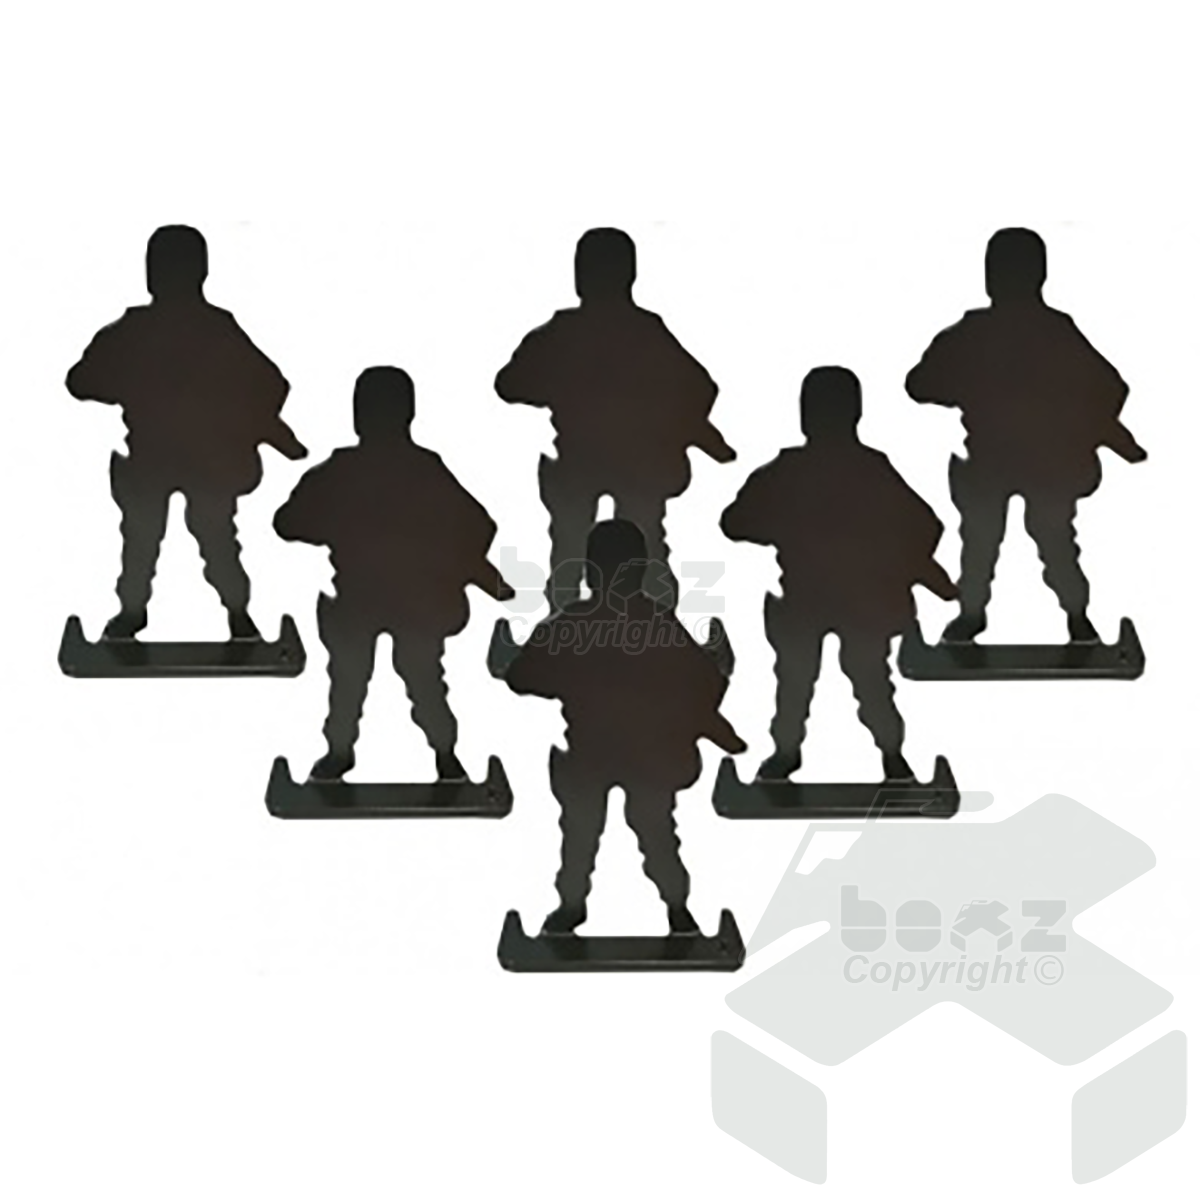 Proshot Metal Soldier Targets Standing - 6 Pack